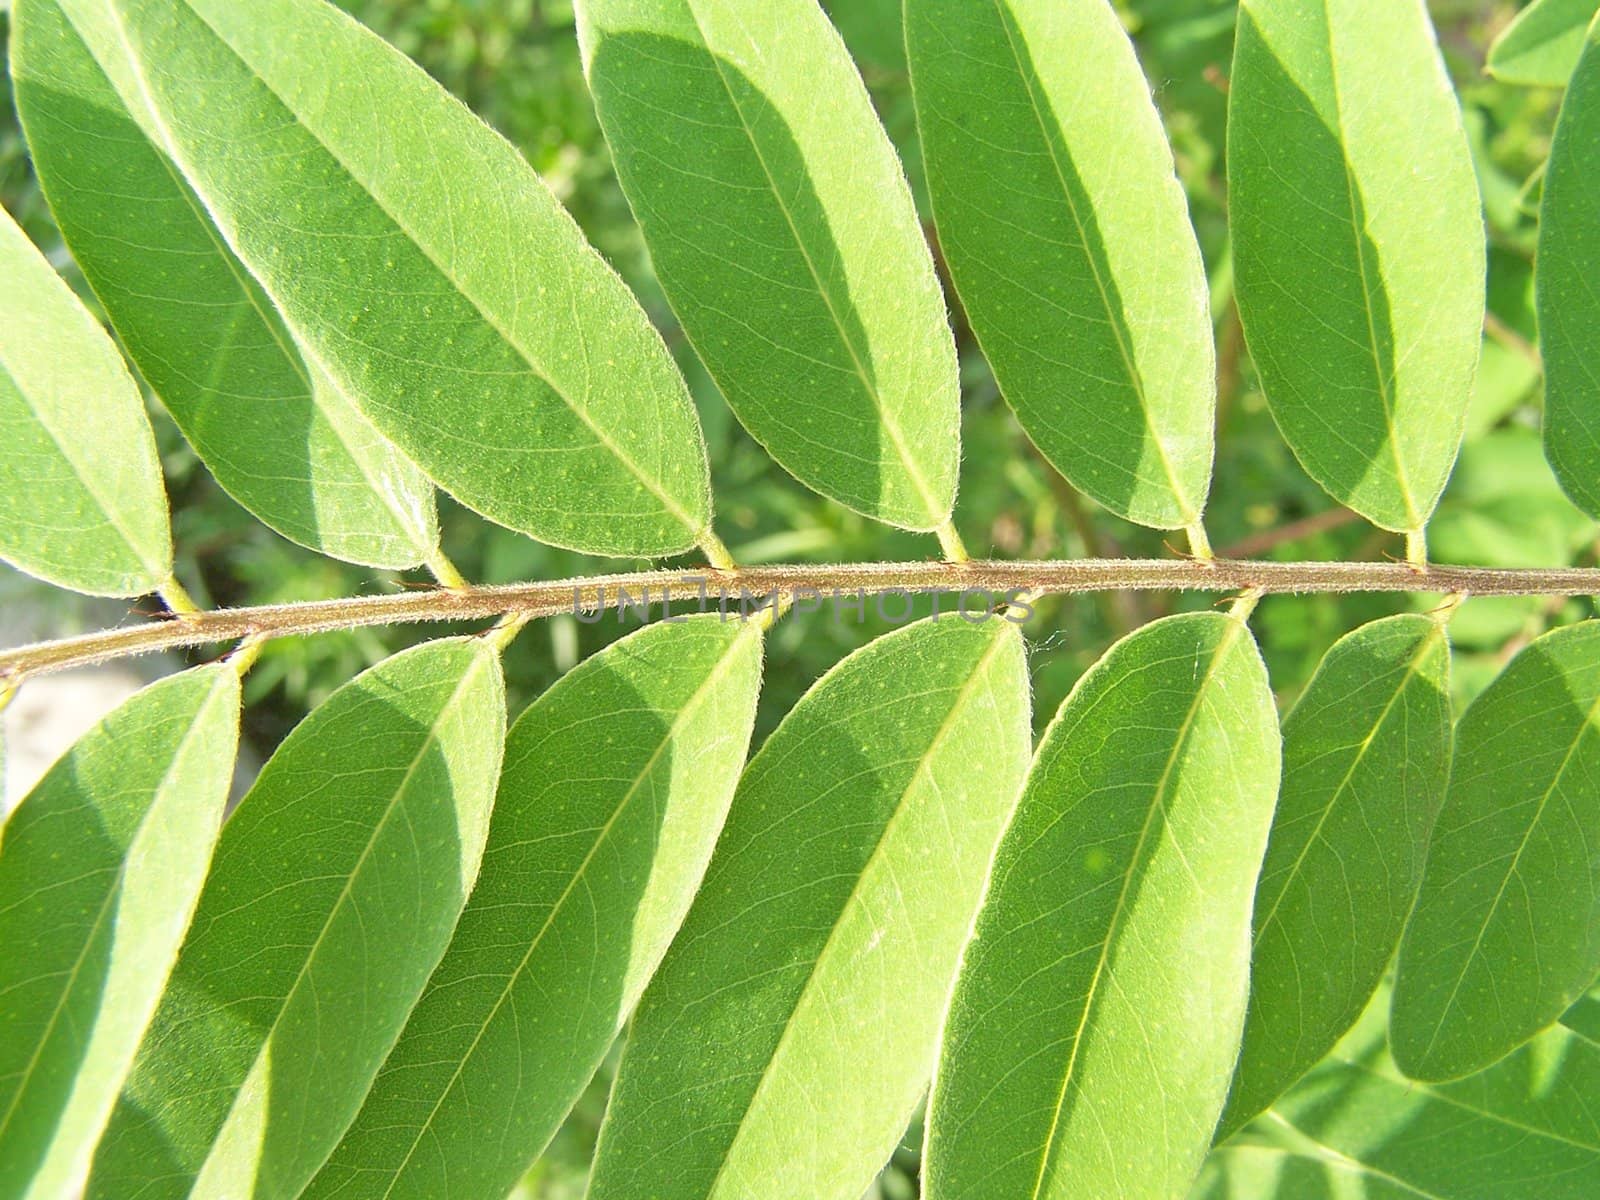 Acacia leaves by Lessadar